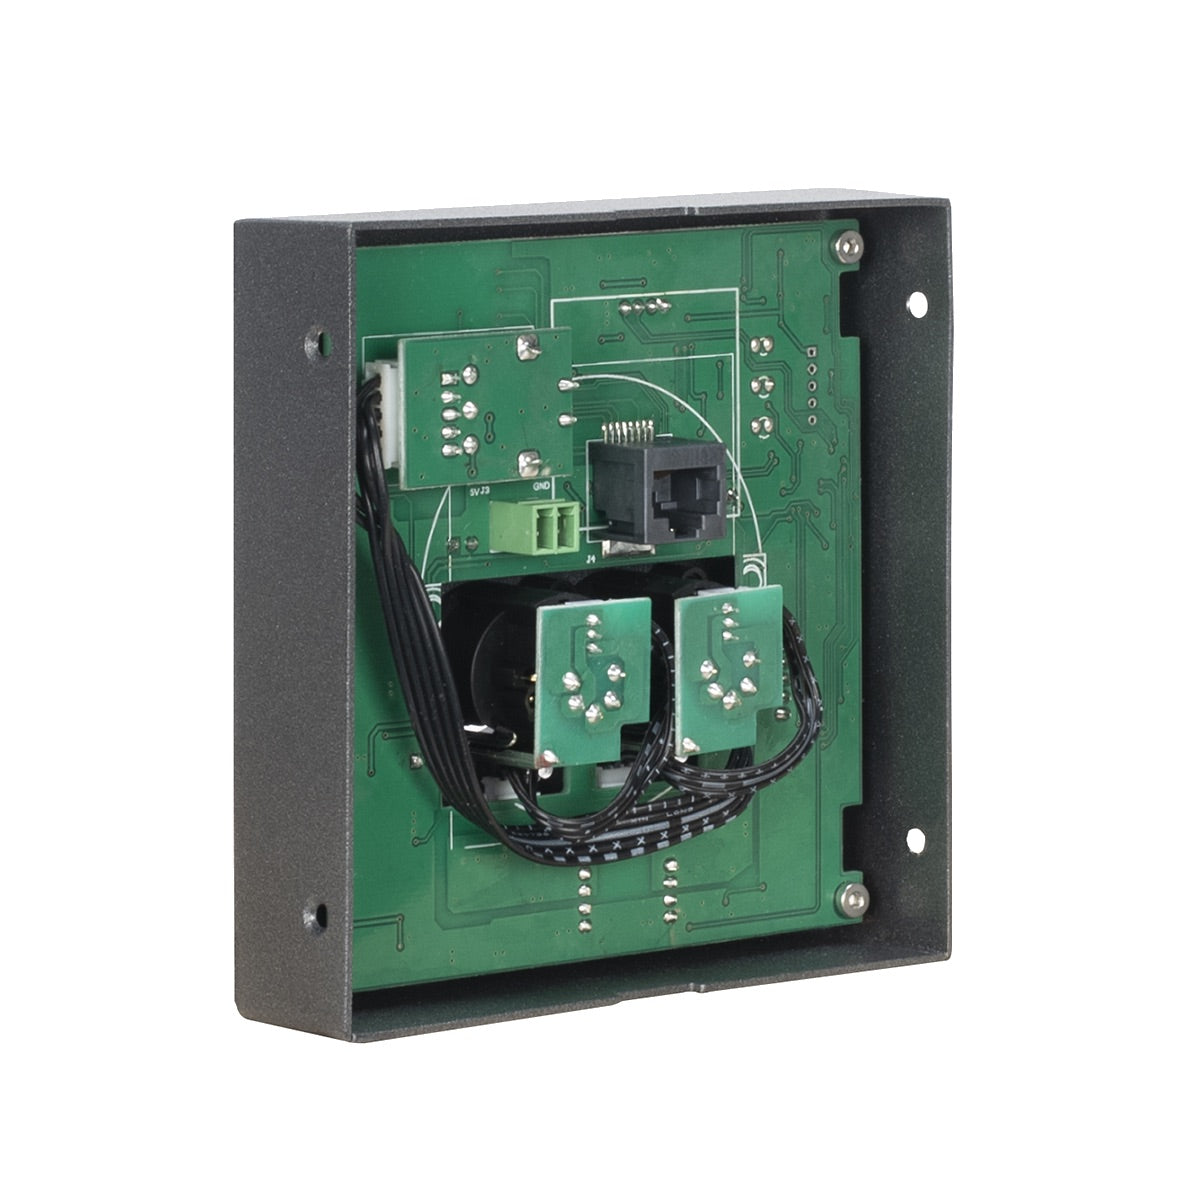 Obsidian Netron EP2 - 2-port 5-pin XLR DMX/RDM to Ethernet Gateway, display rear right